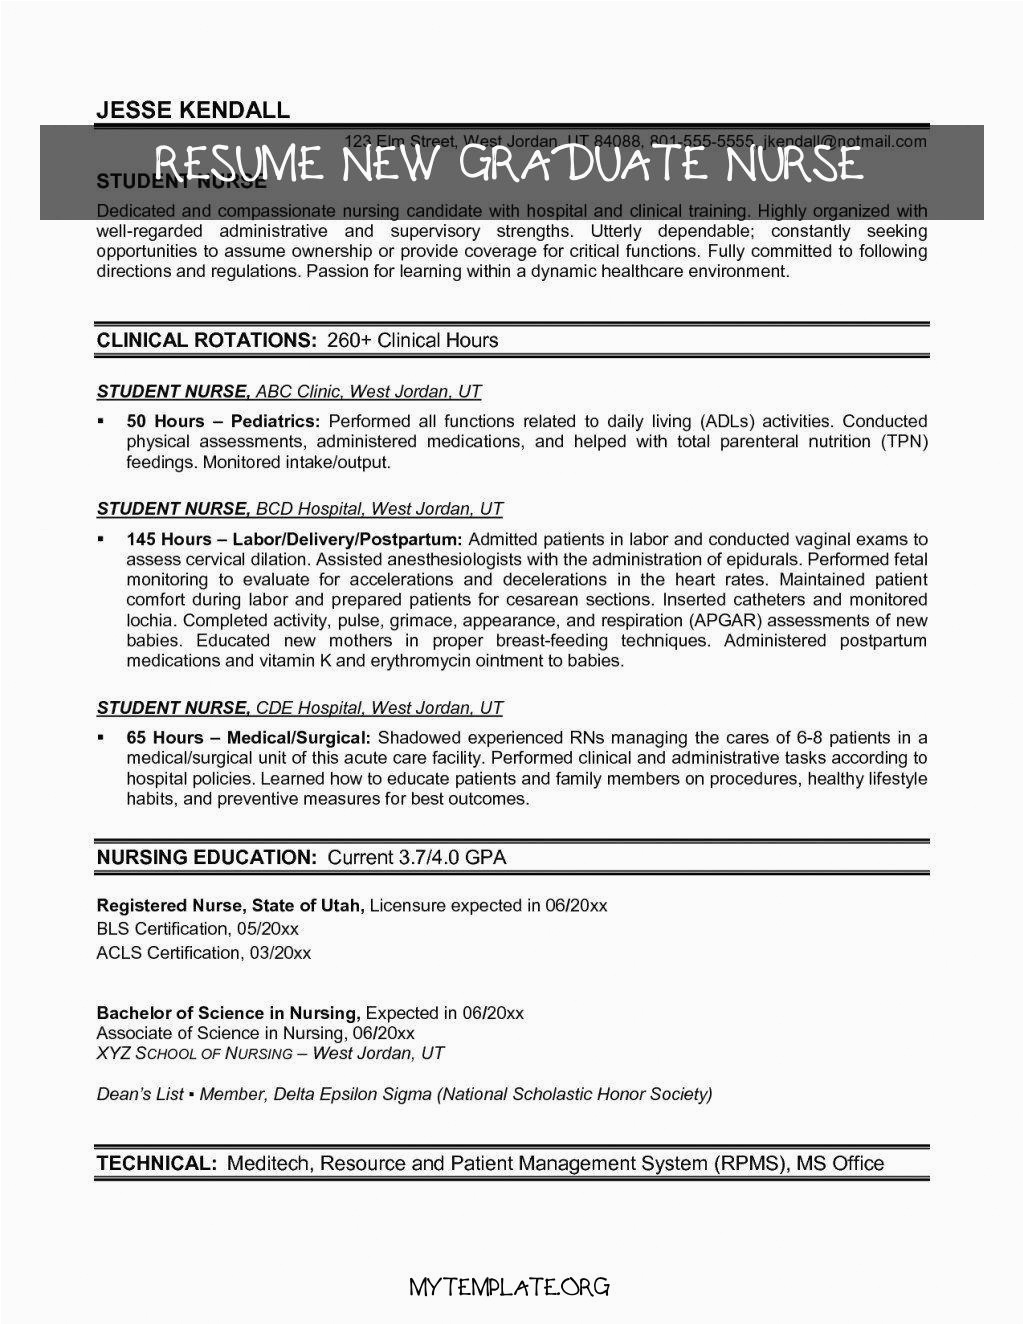 New Graduate Registered Nurse Resume Template 9 Resume New Graduate Nurse for September 2021